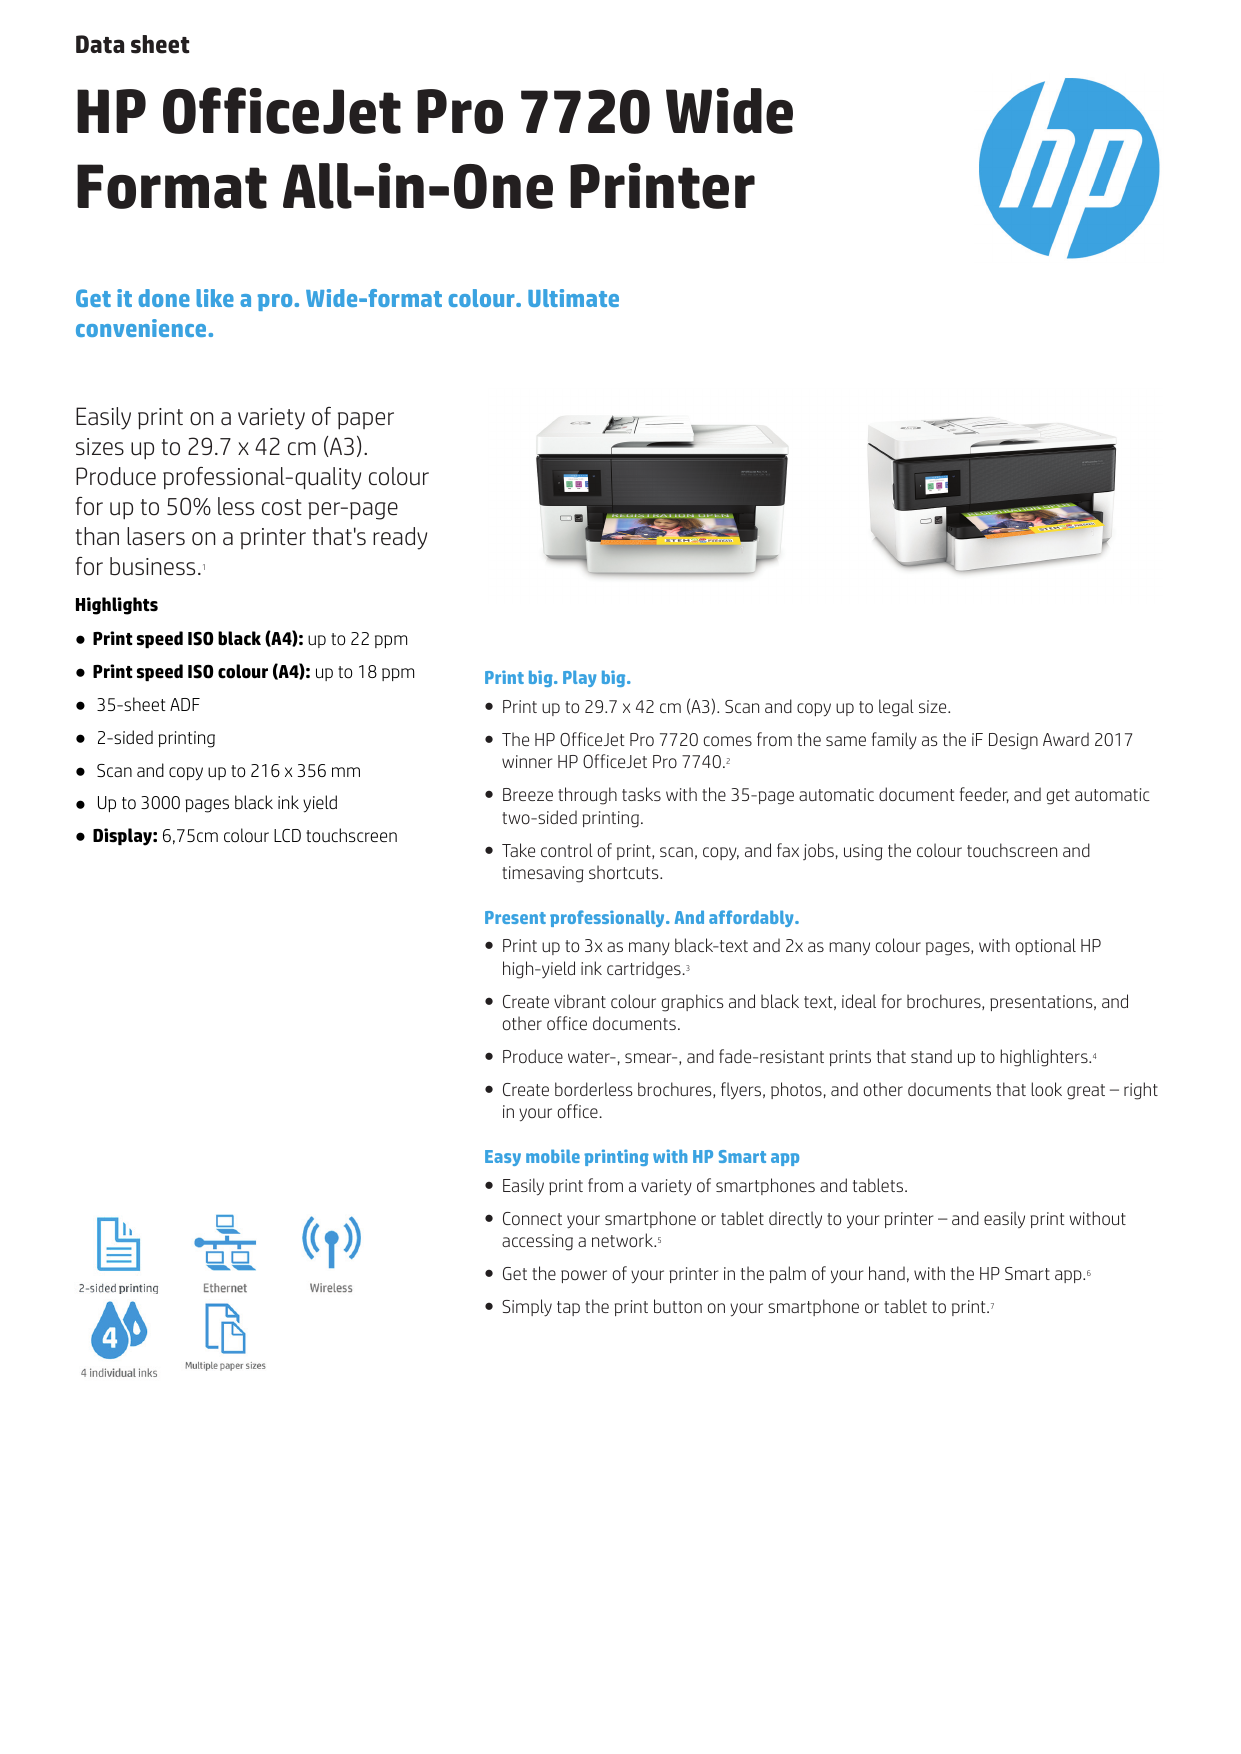 Download Drivers Hp Officejet 7720 Pro / Hp Officejet Pro 7720 Drivers Manual Scanner Setup ...